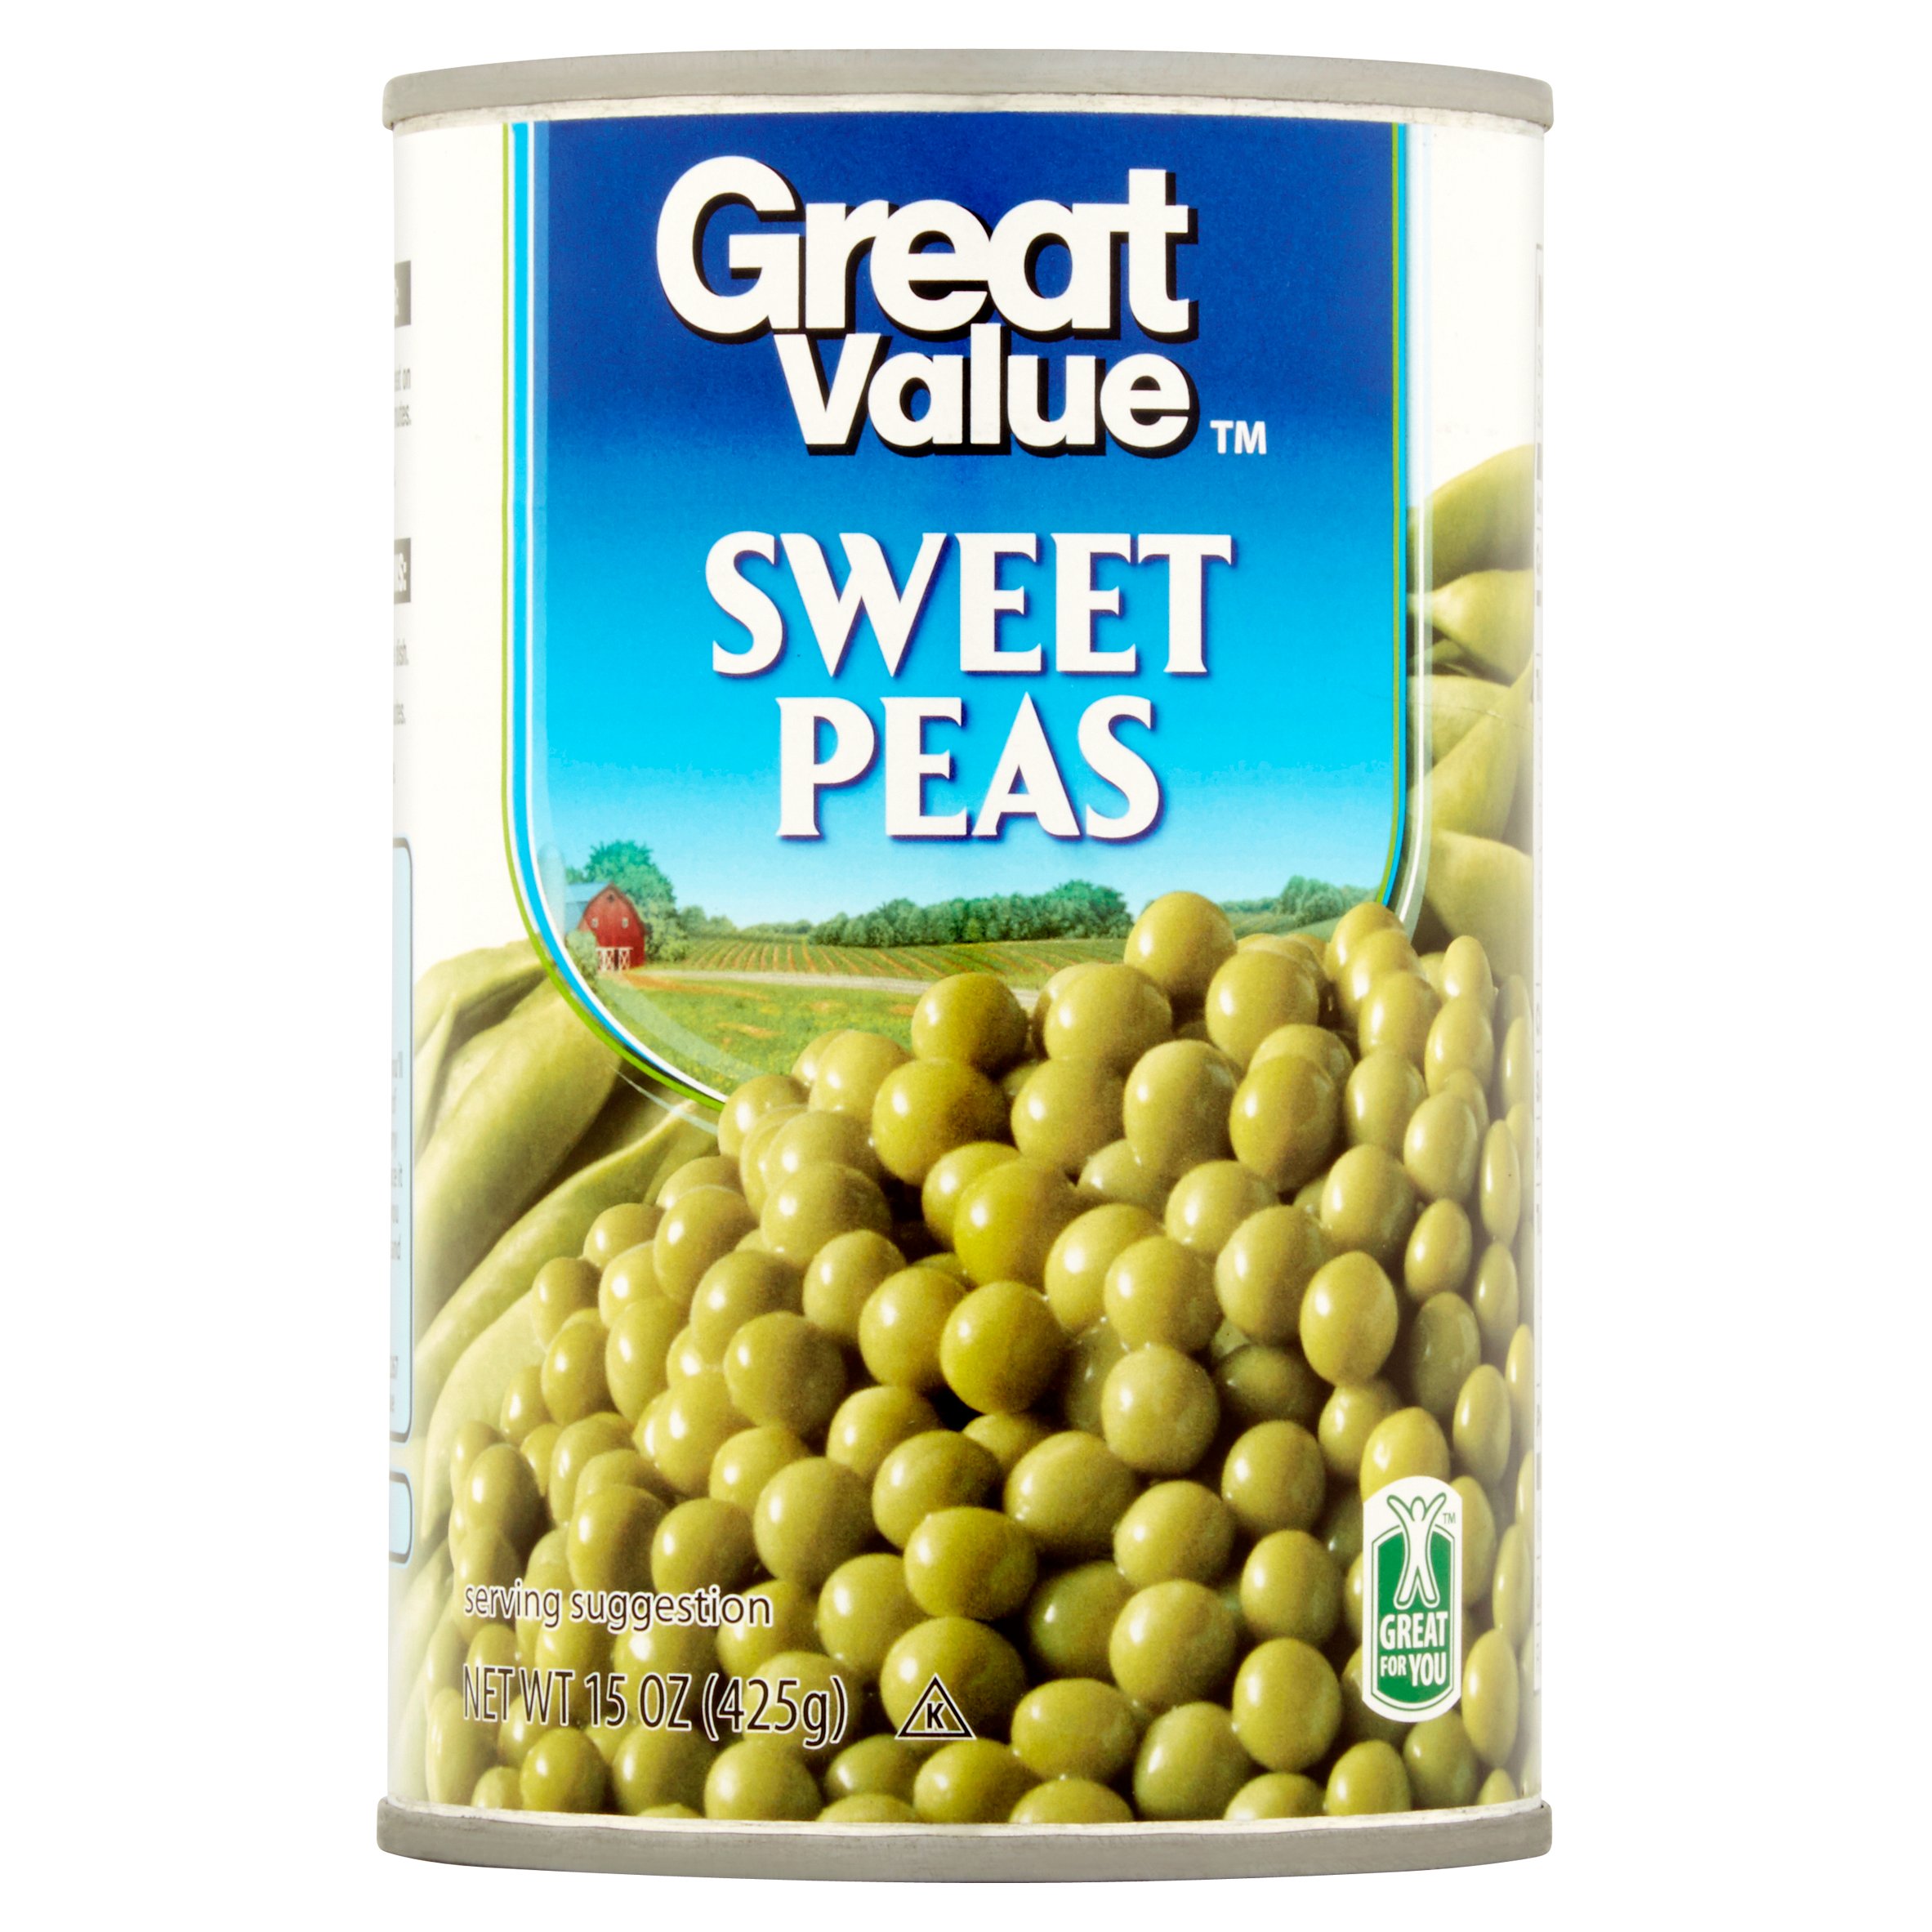 Great Value Sweet Peas 15 oz